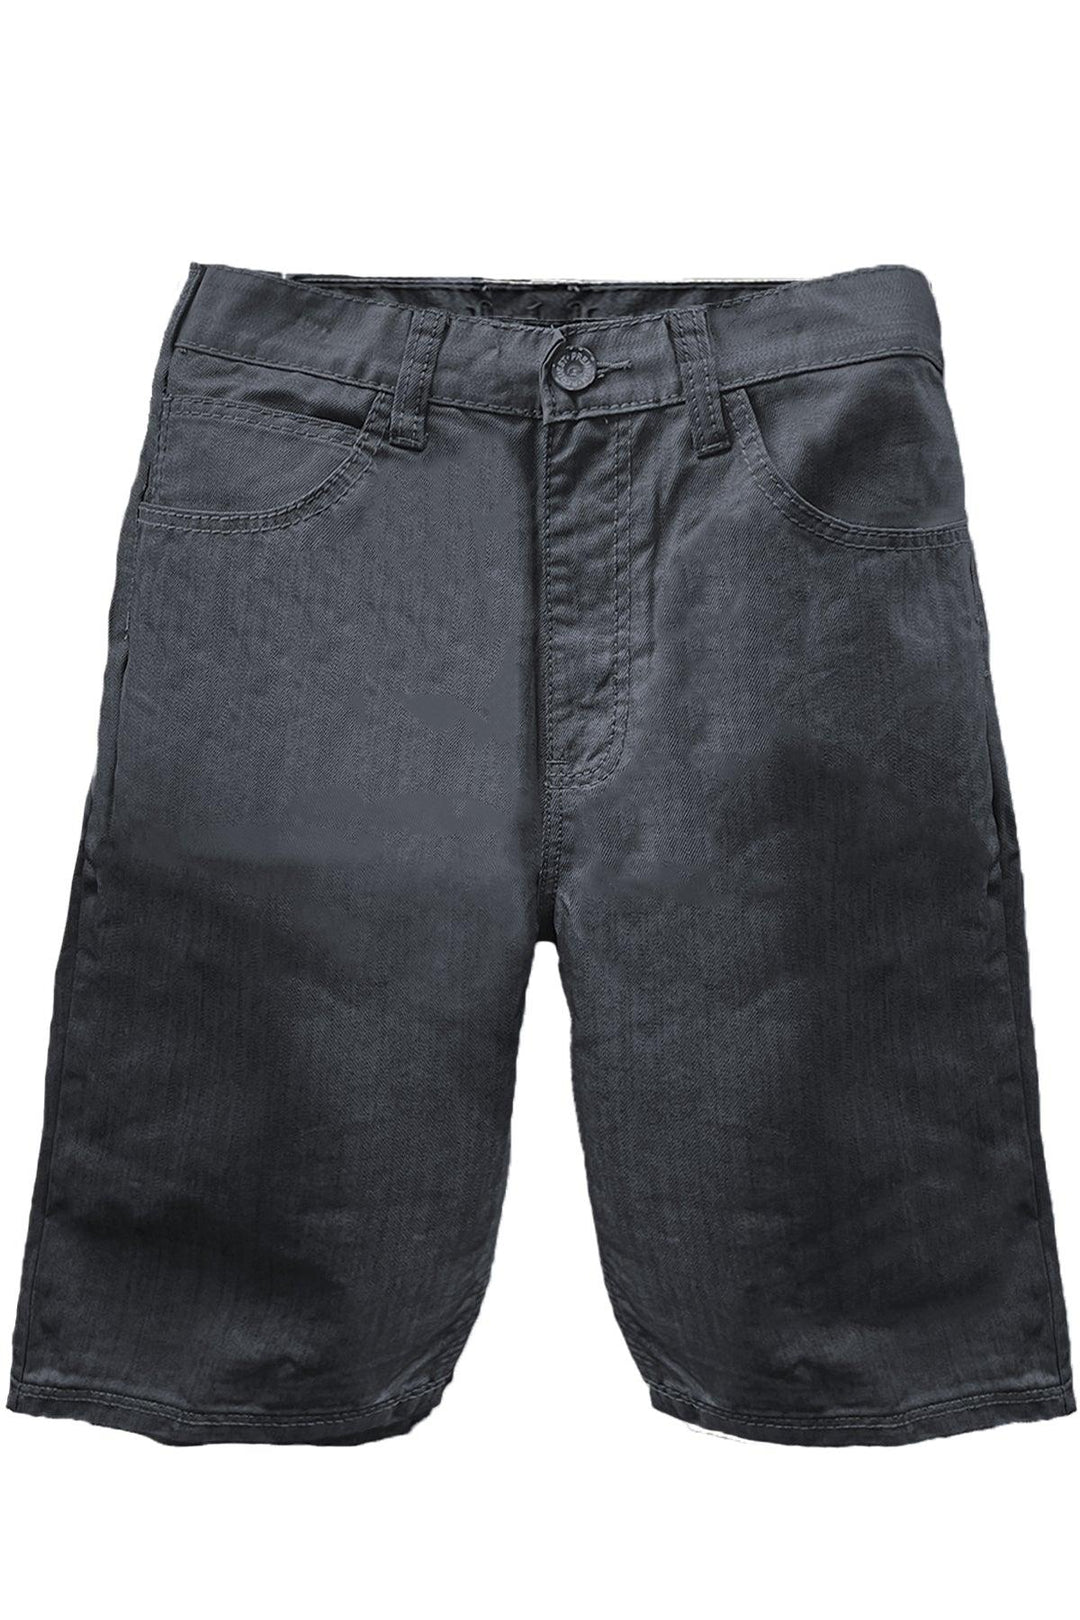 Premium Black 5 Pocket Shorts - Brand My Case